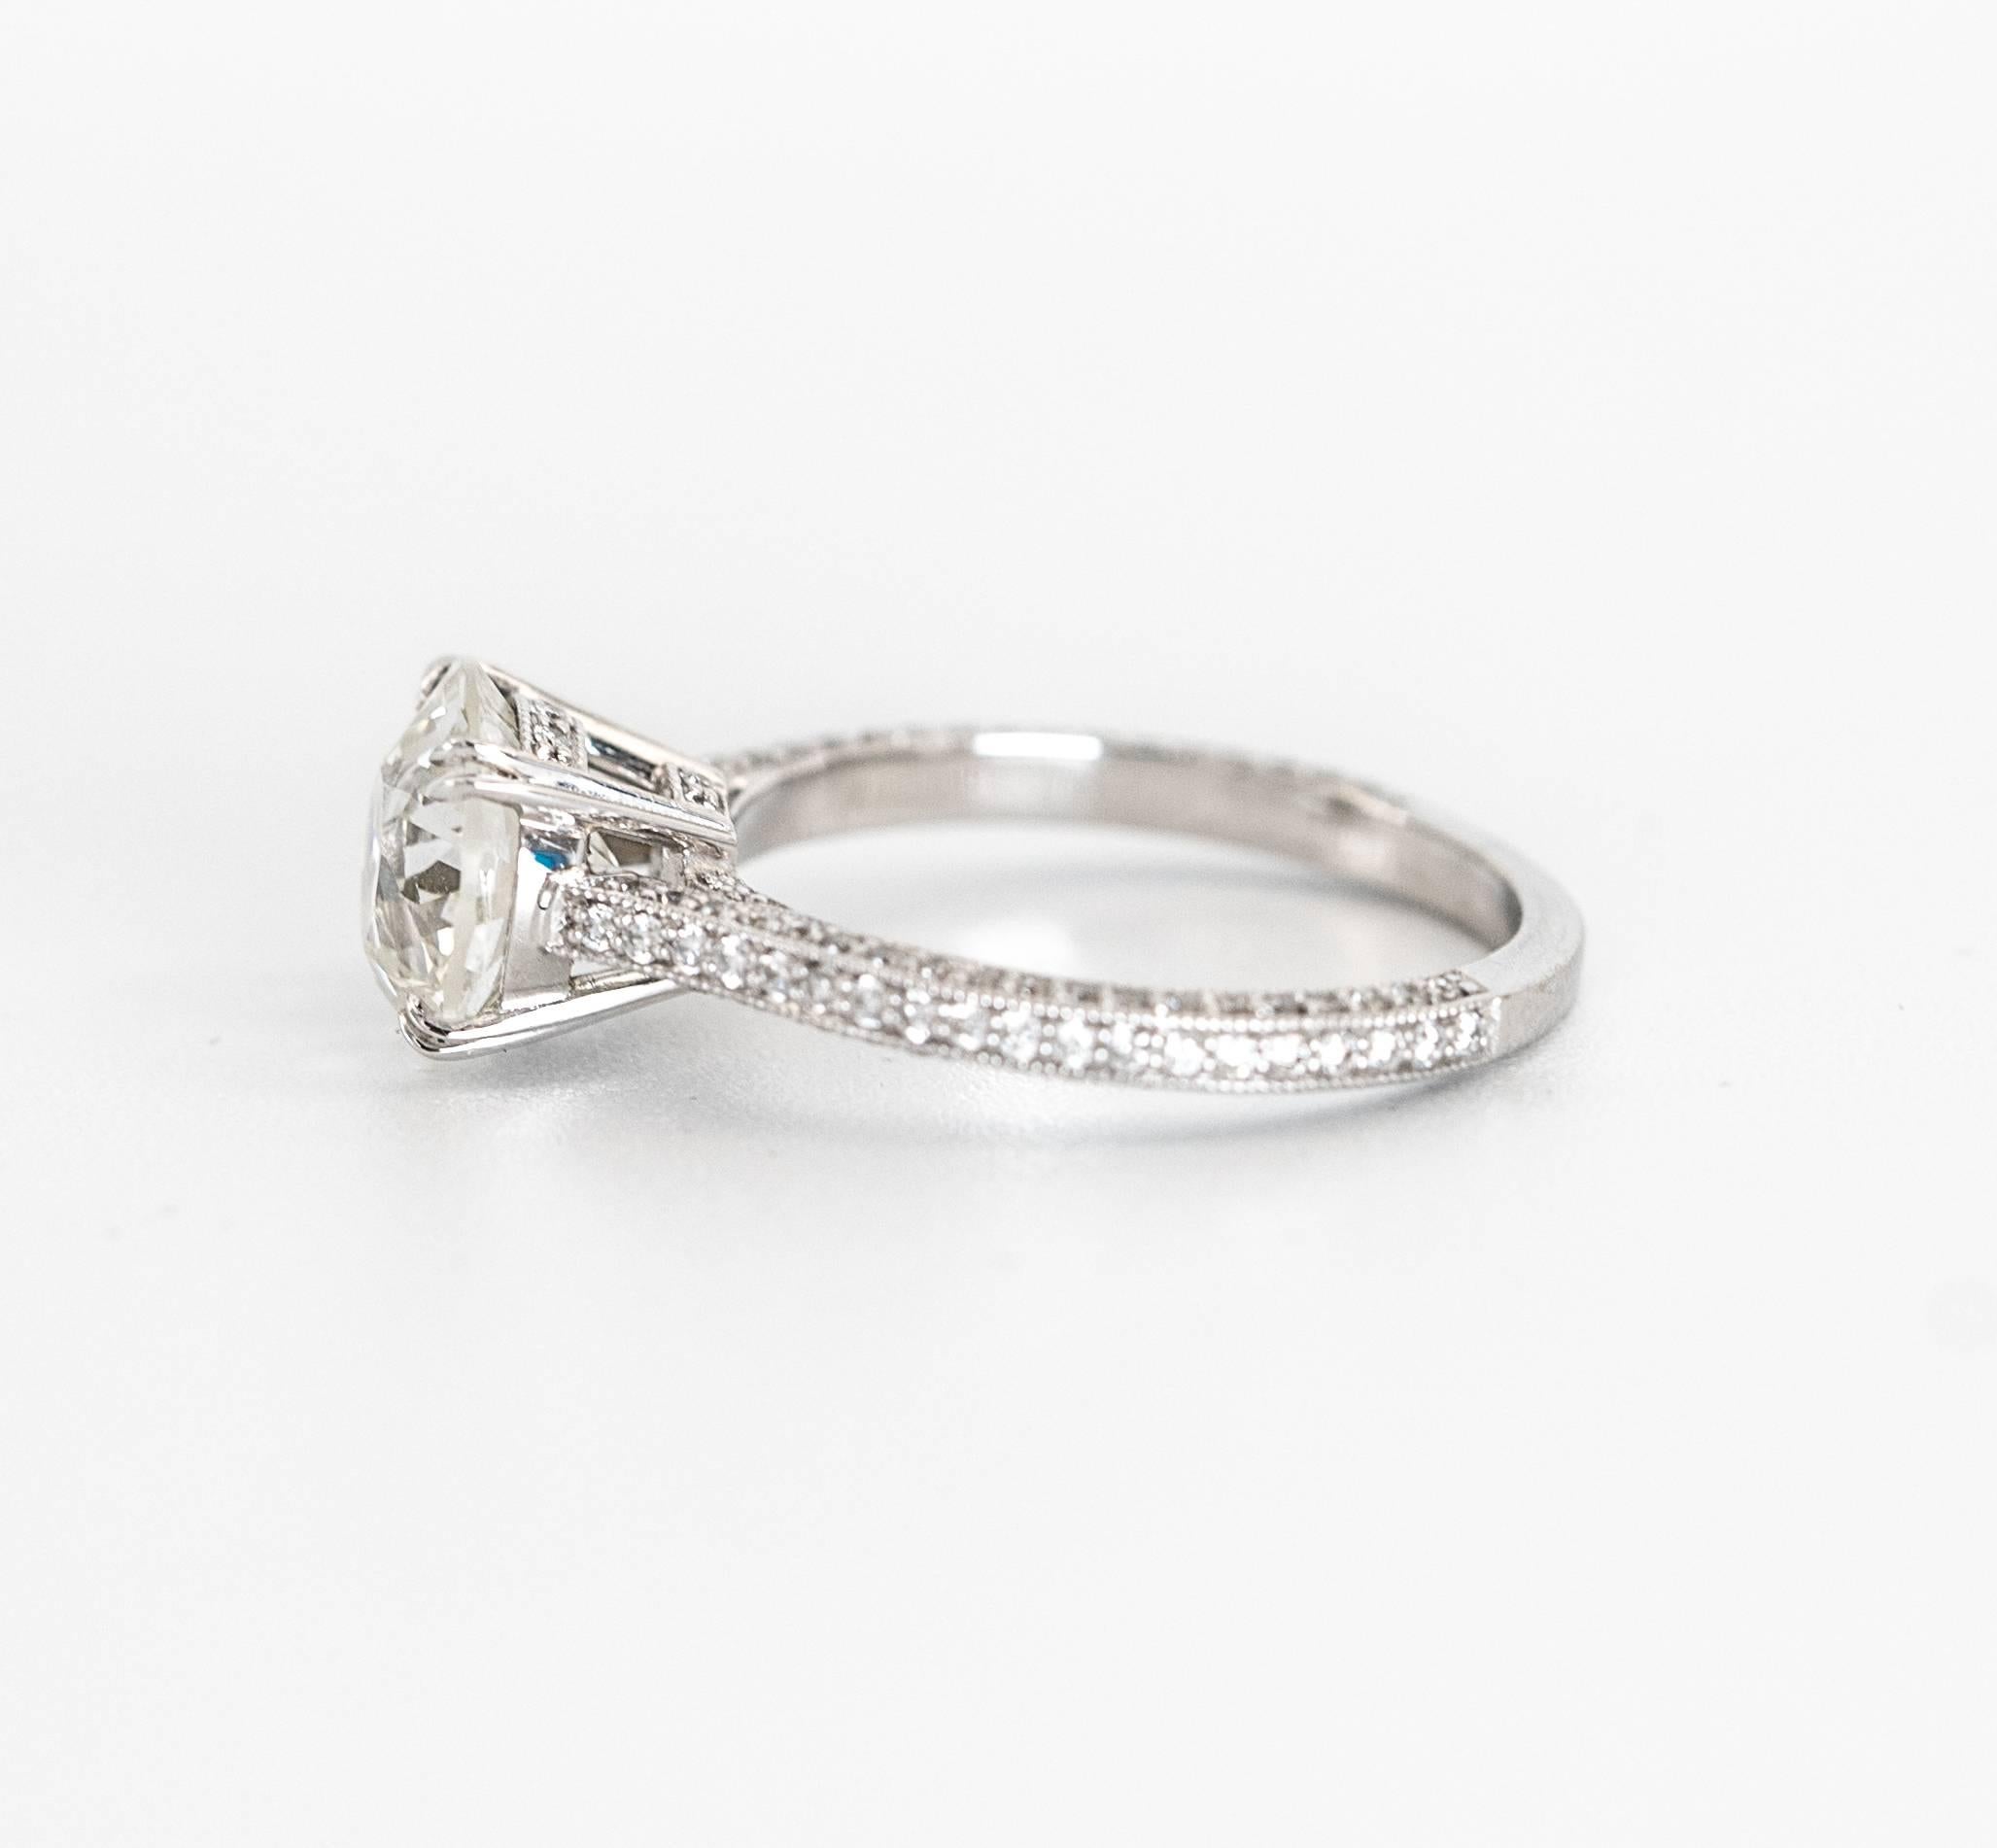 Old European Cut 2.28 Carat Old Euro Cut Diamond Engagement Ring, in 18K, by The Diamond Oak